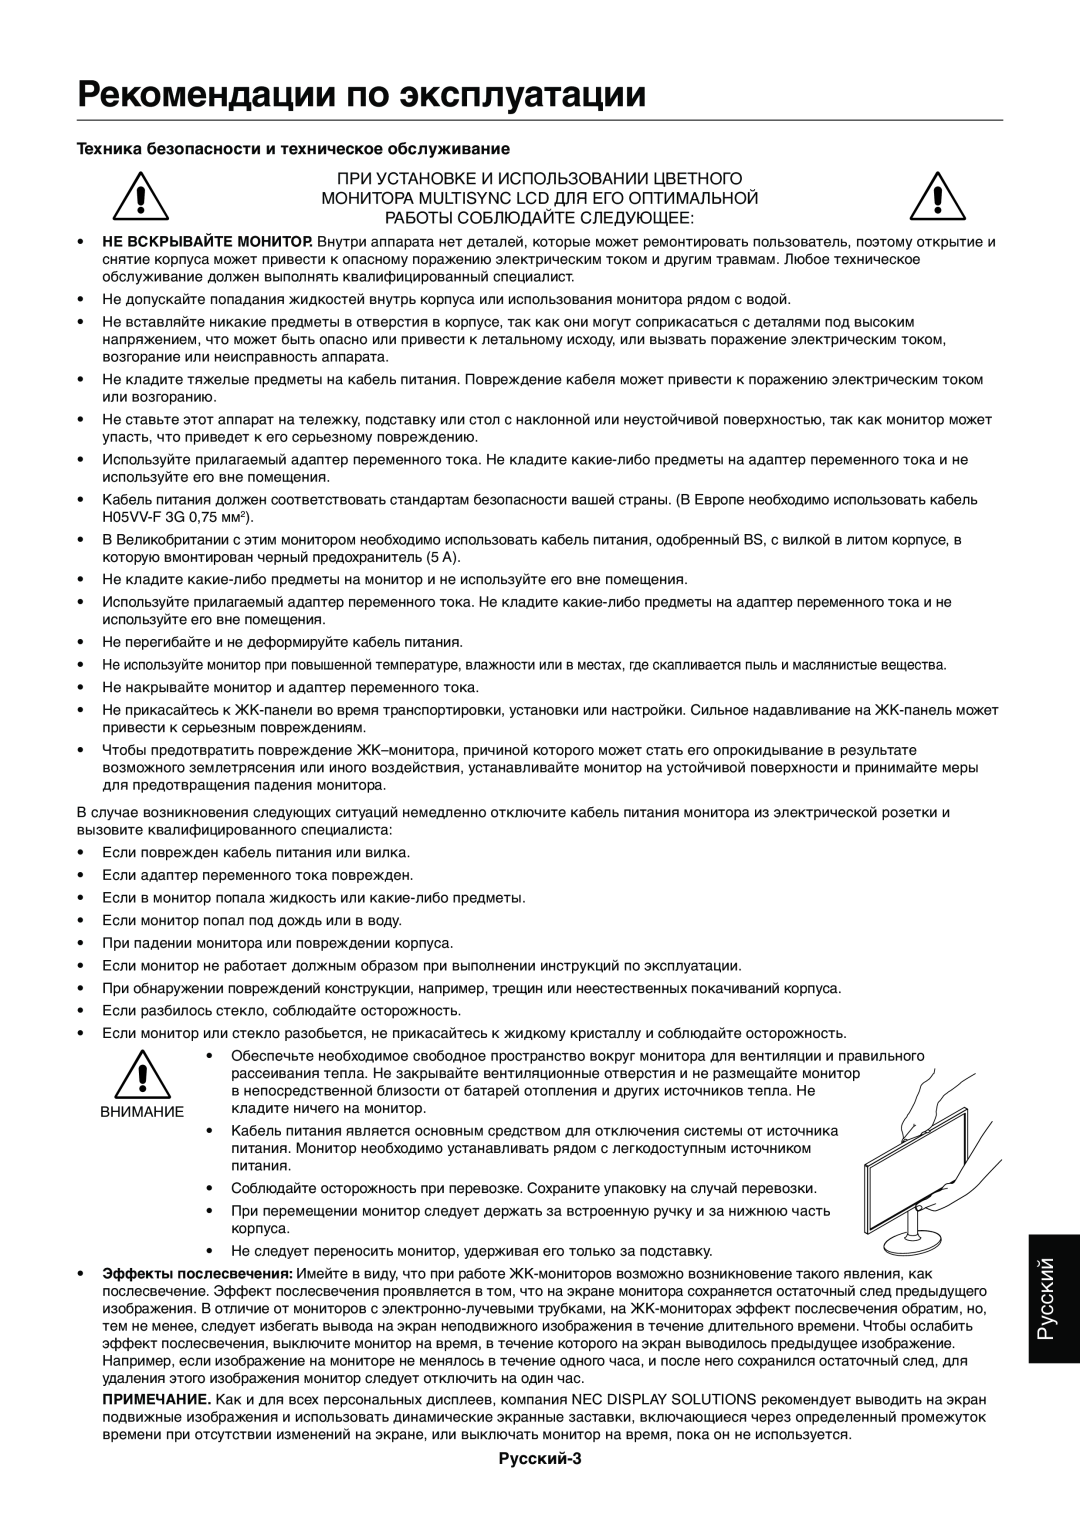 NEC EX231WP manual Рекомендации по эксплуатации, Техника безопасности и техническое обслуживание, Русский-3 